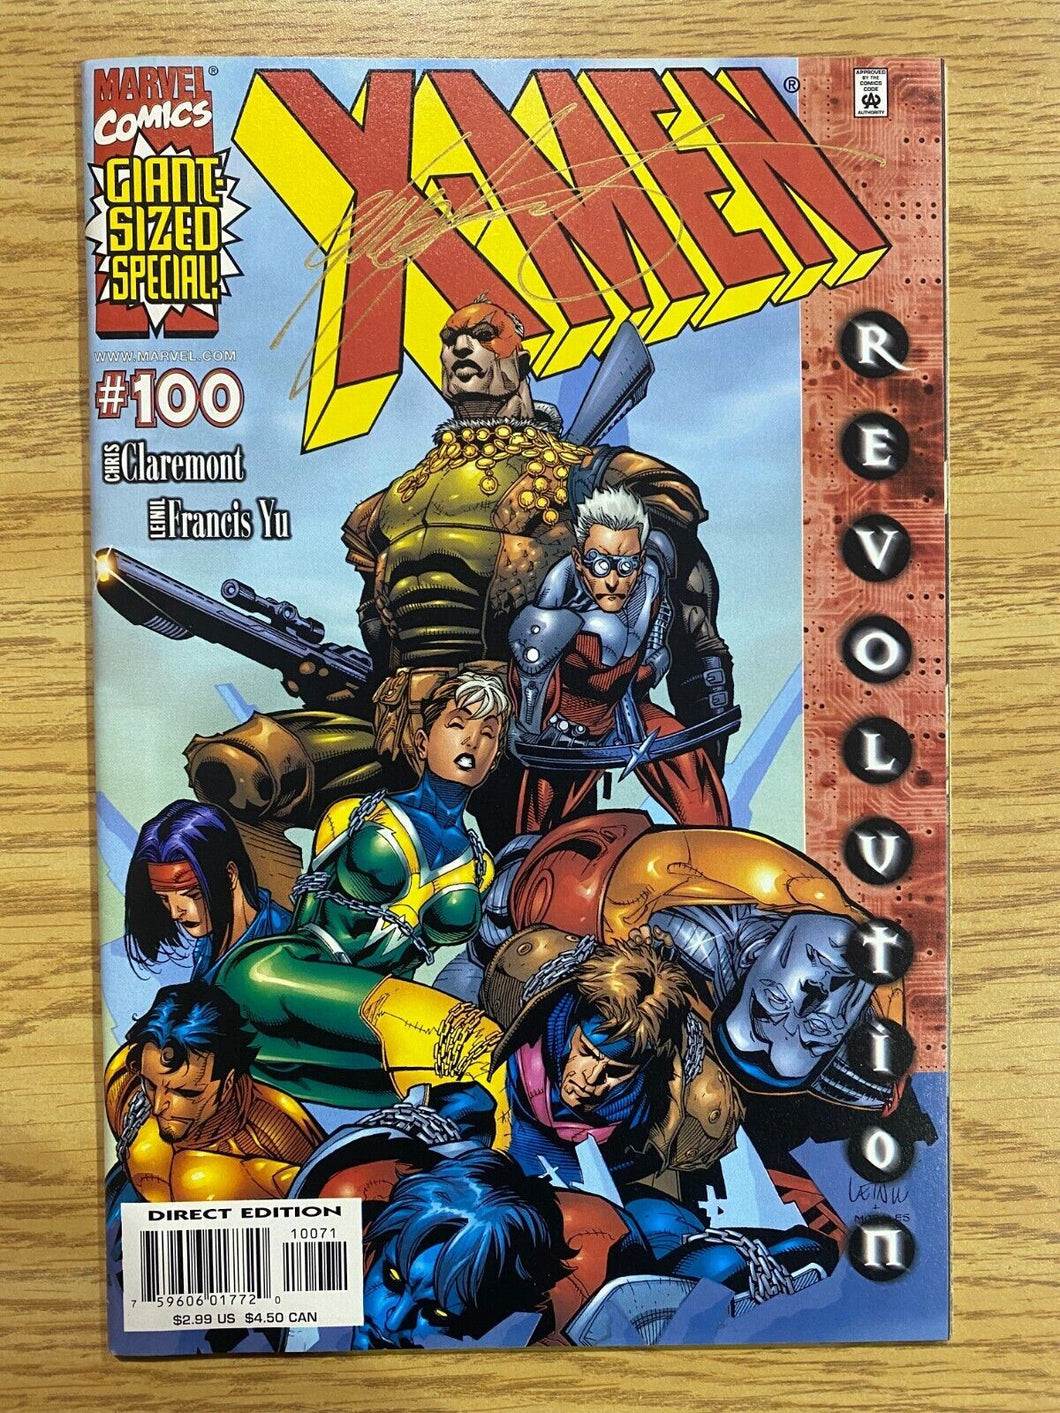 2000 Marvel Comics X-Men #100 Signed by Chris Claremont